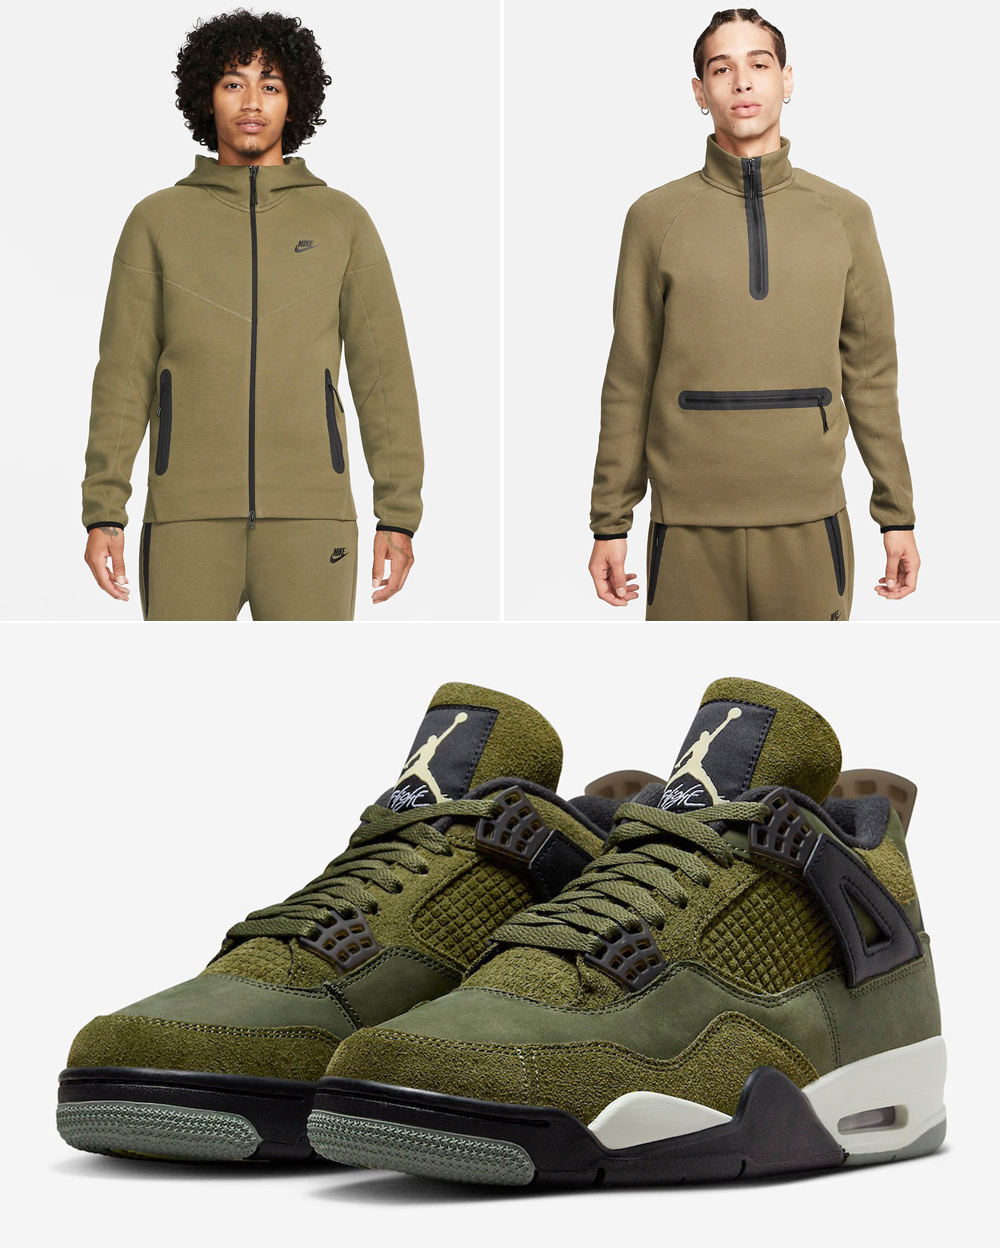 Air Jordan 4 Craft Olive Nike Tech Fleece Apparel